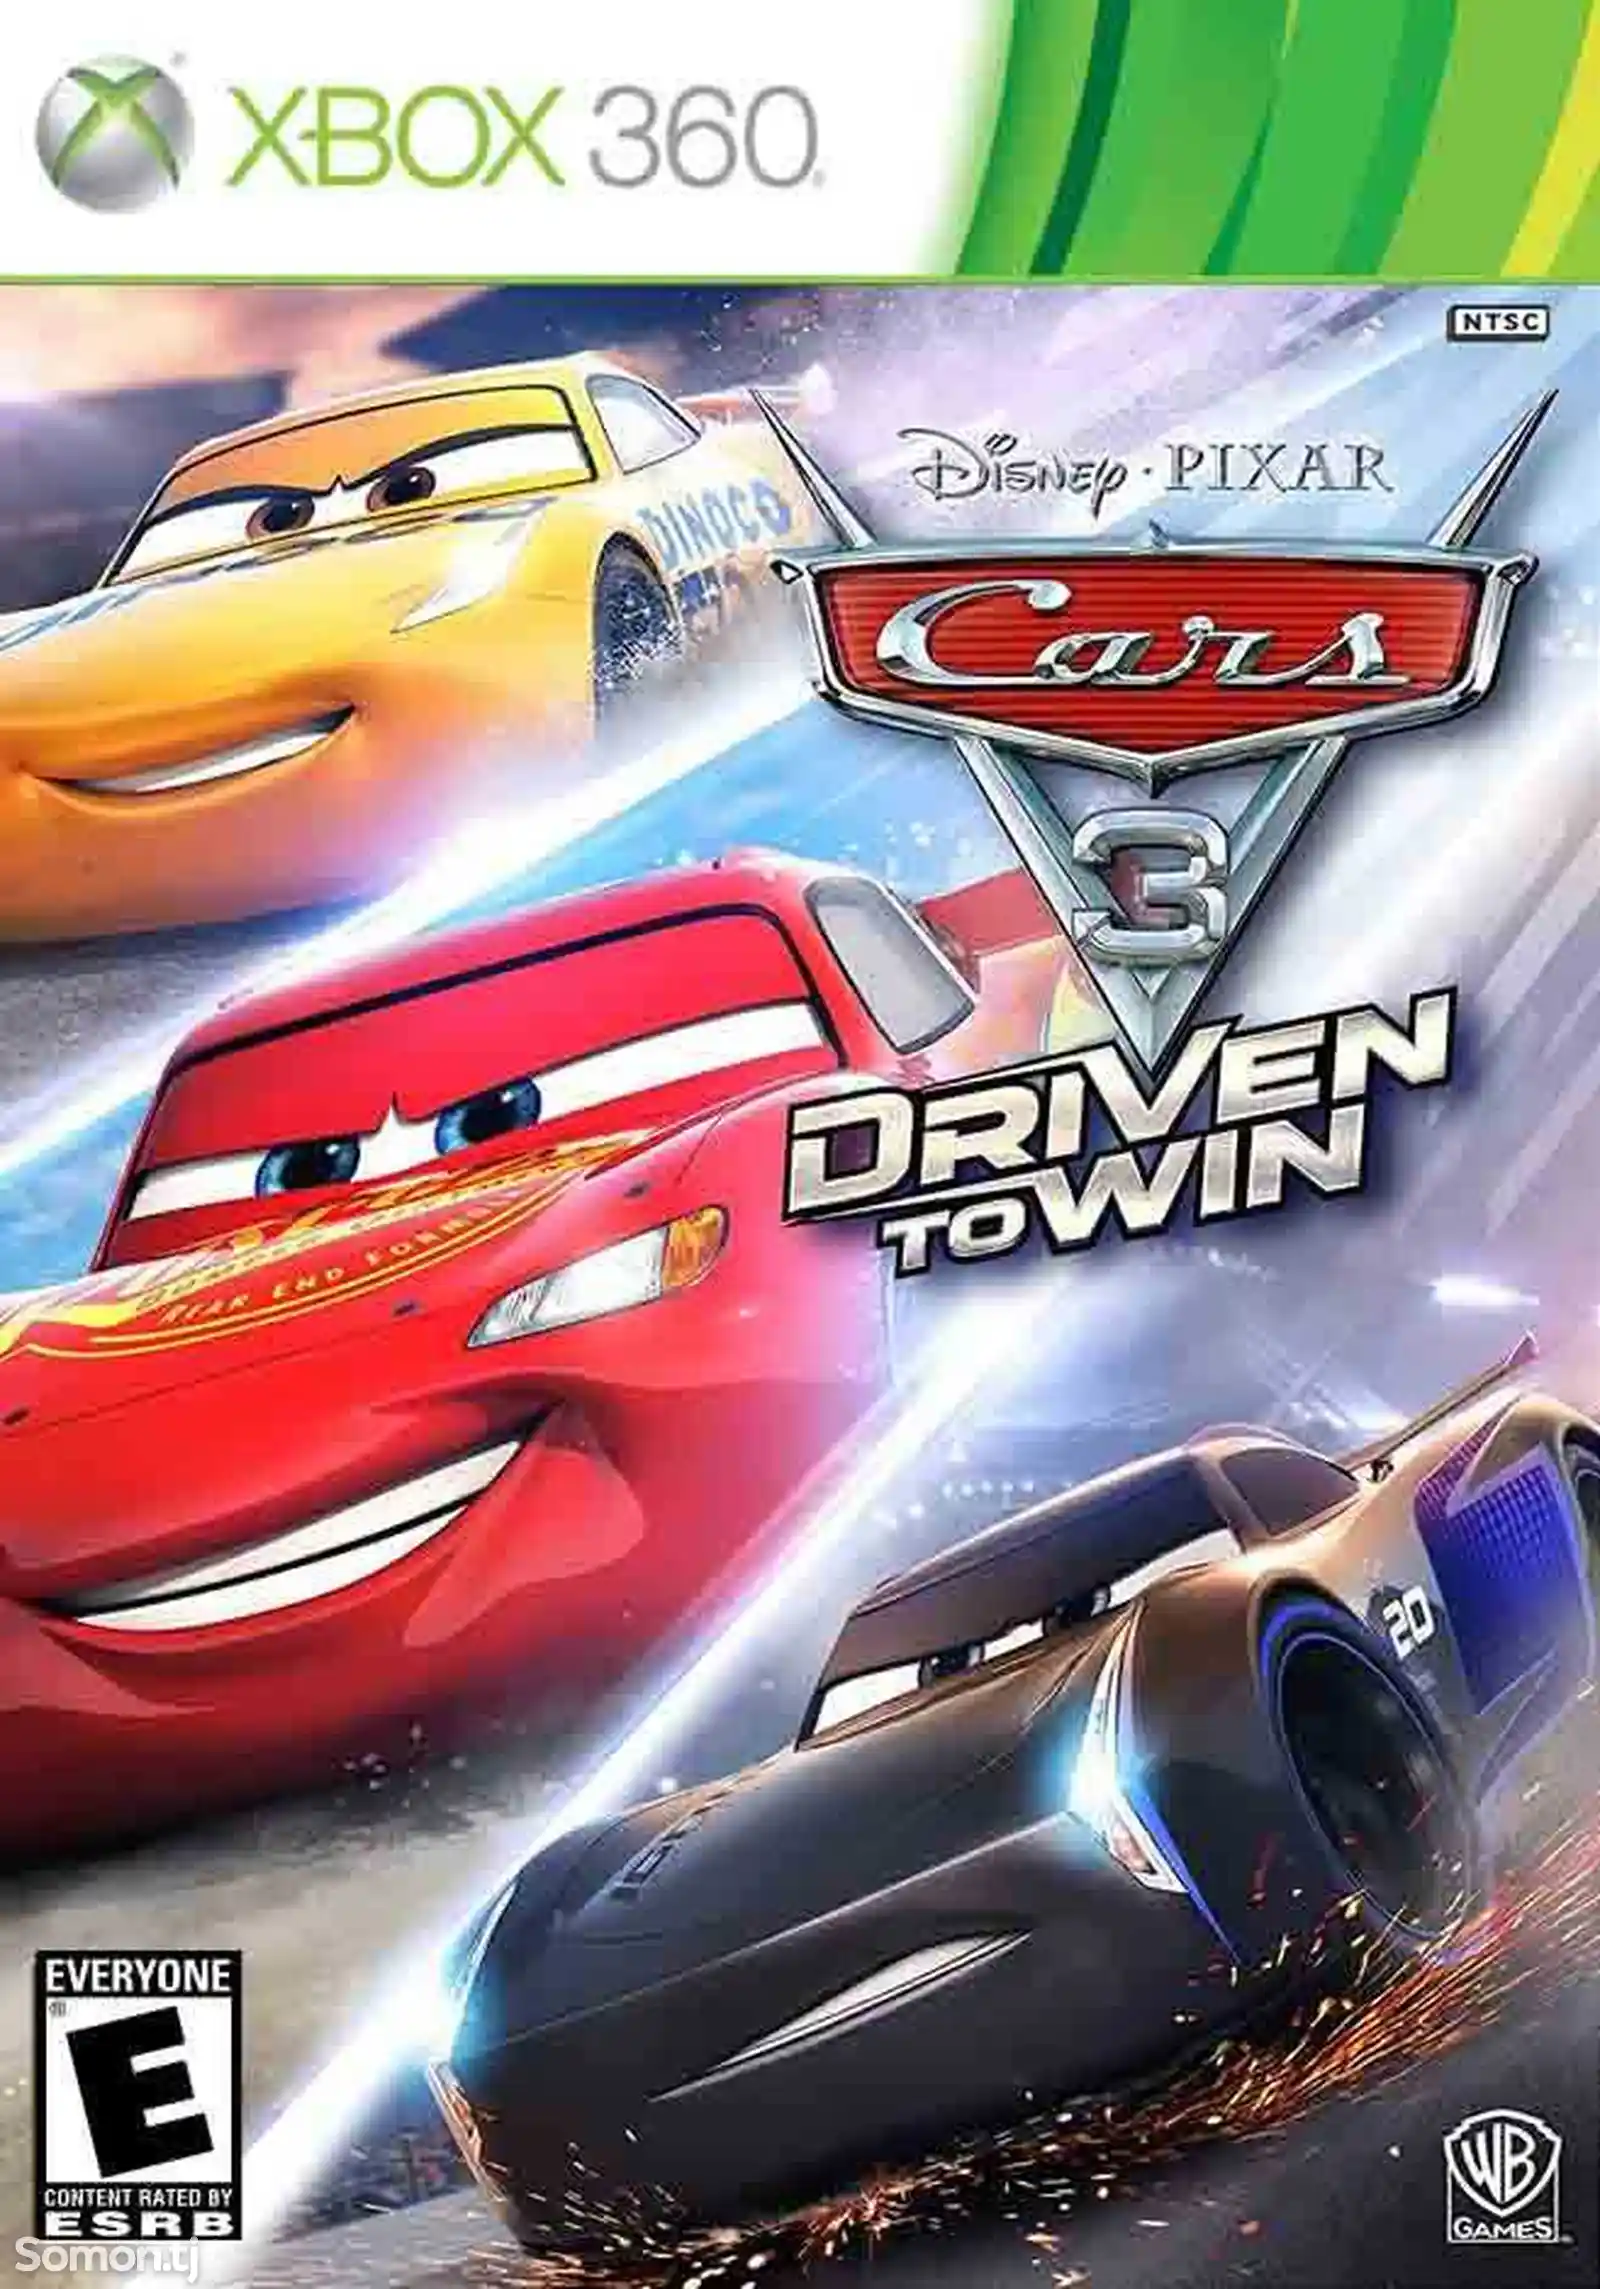 Игра Car 3 driven to win для прошитых Xbox 360